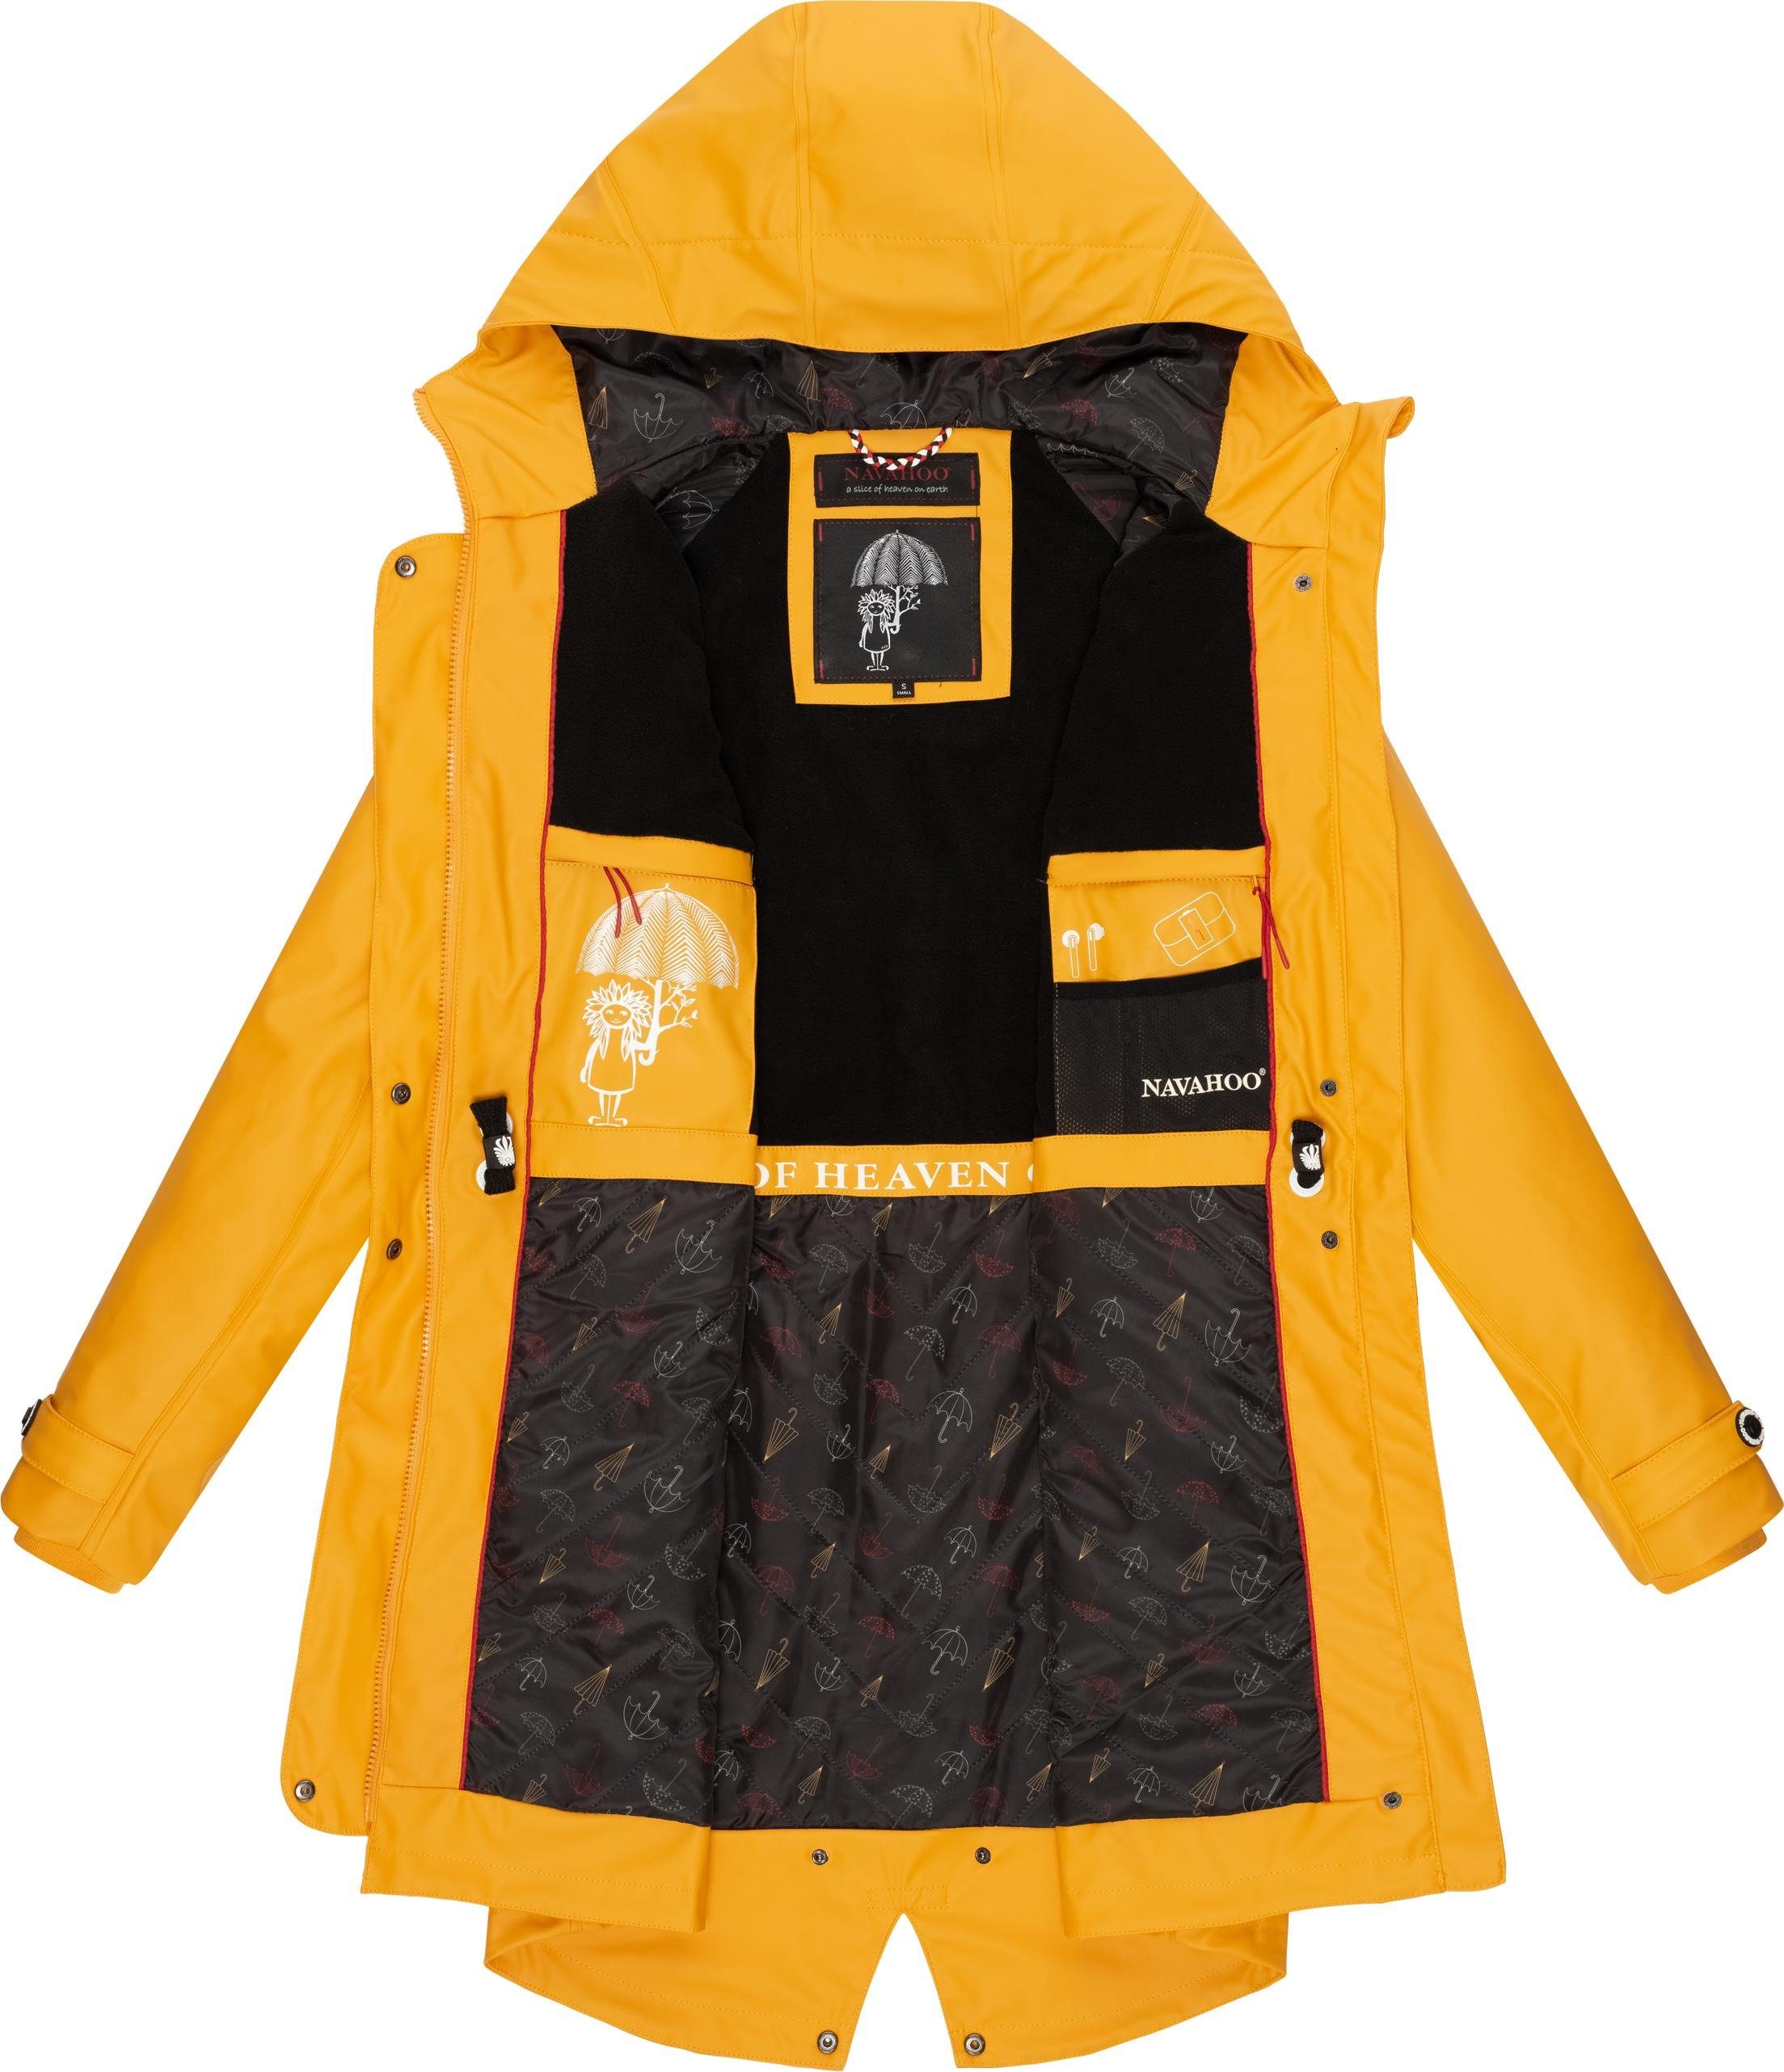 Damen Rainy Kapuze Regenmantel Regenjacke gelb Flower Navahoo modischer mit